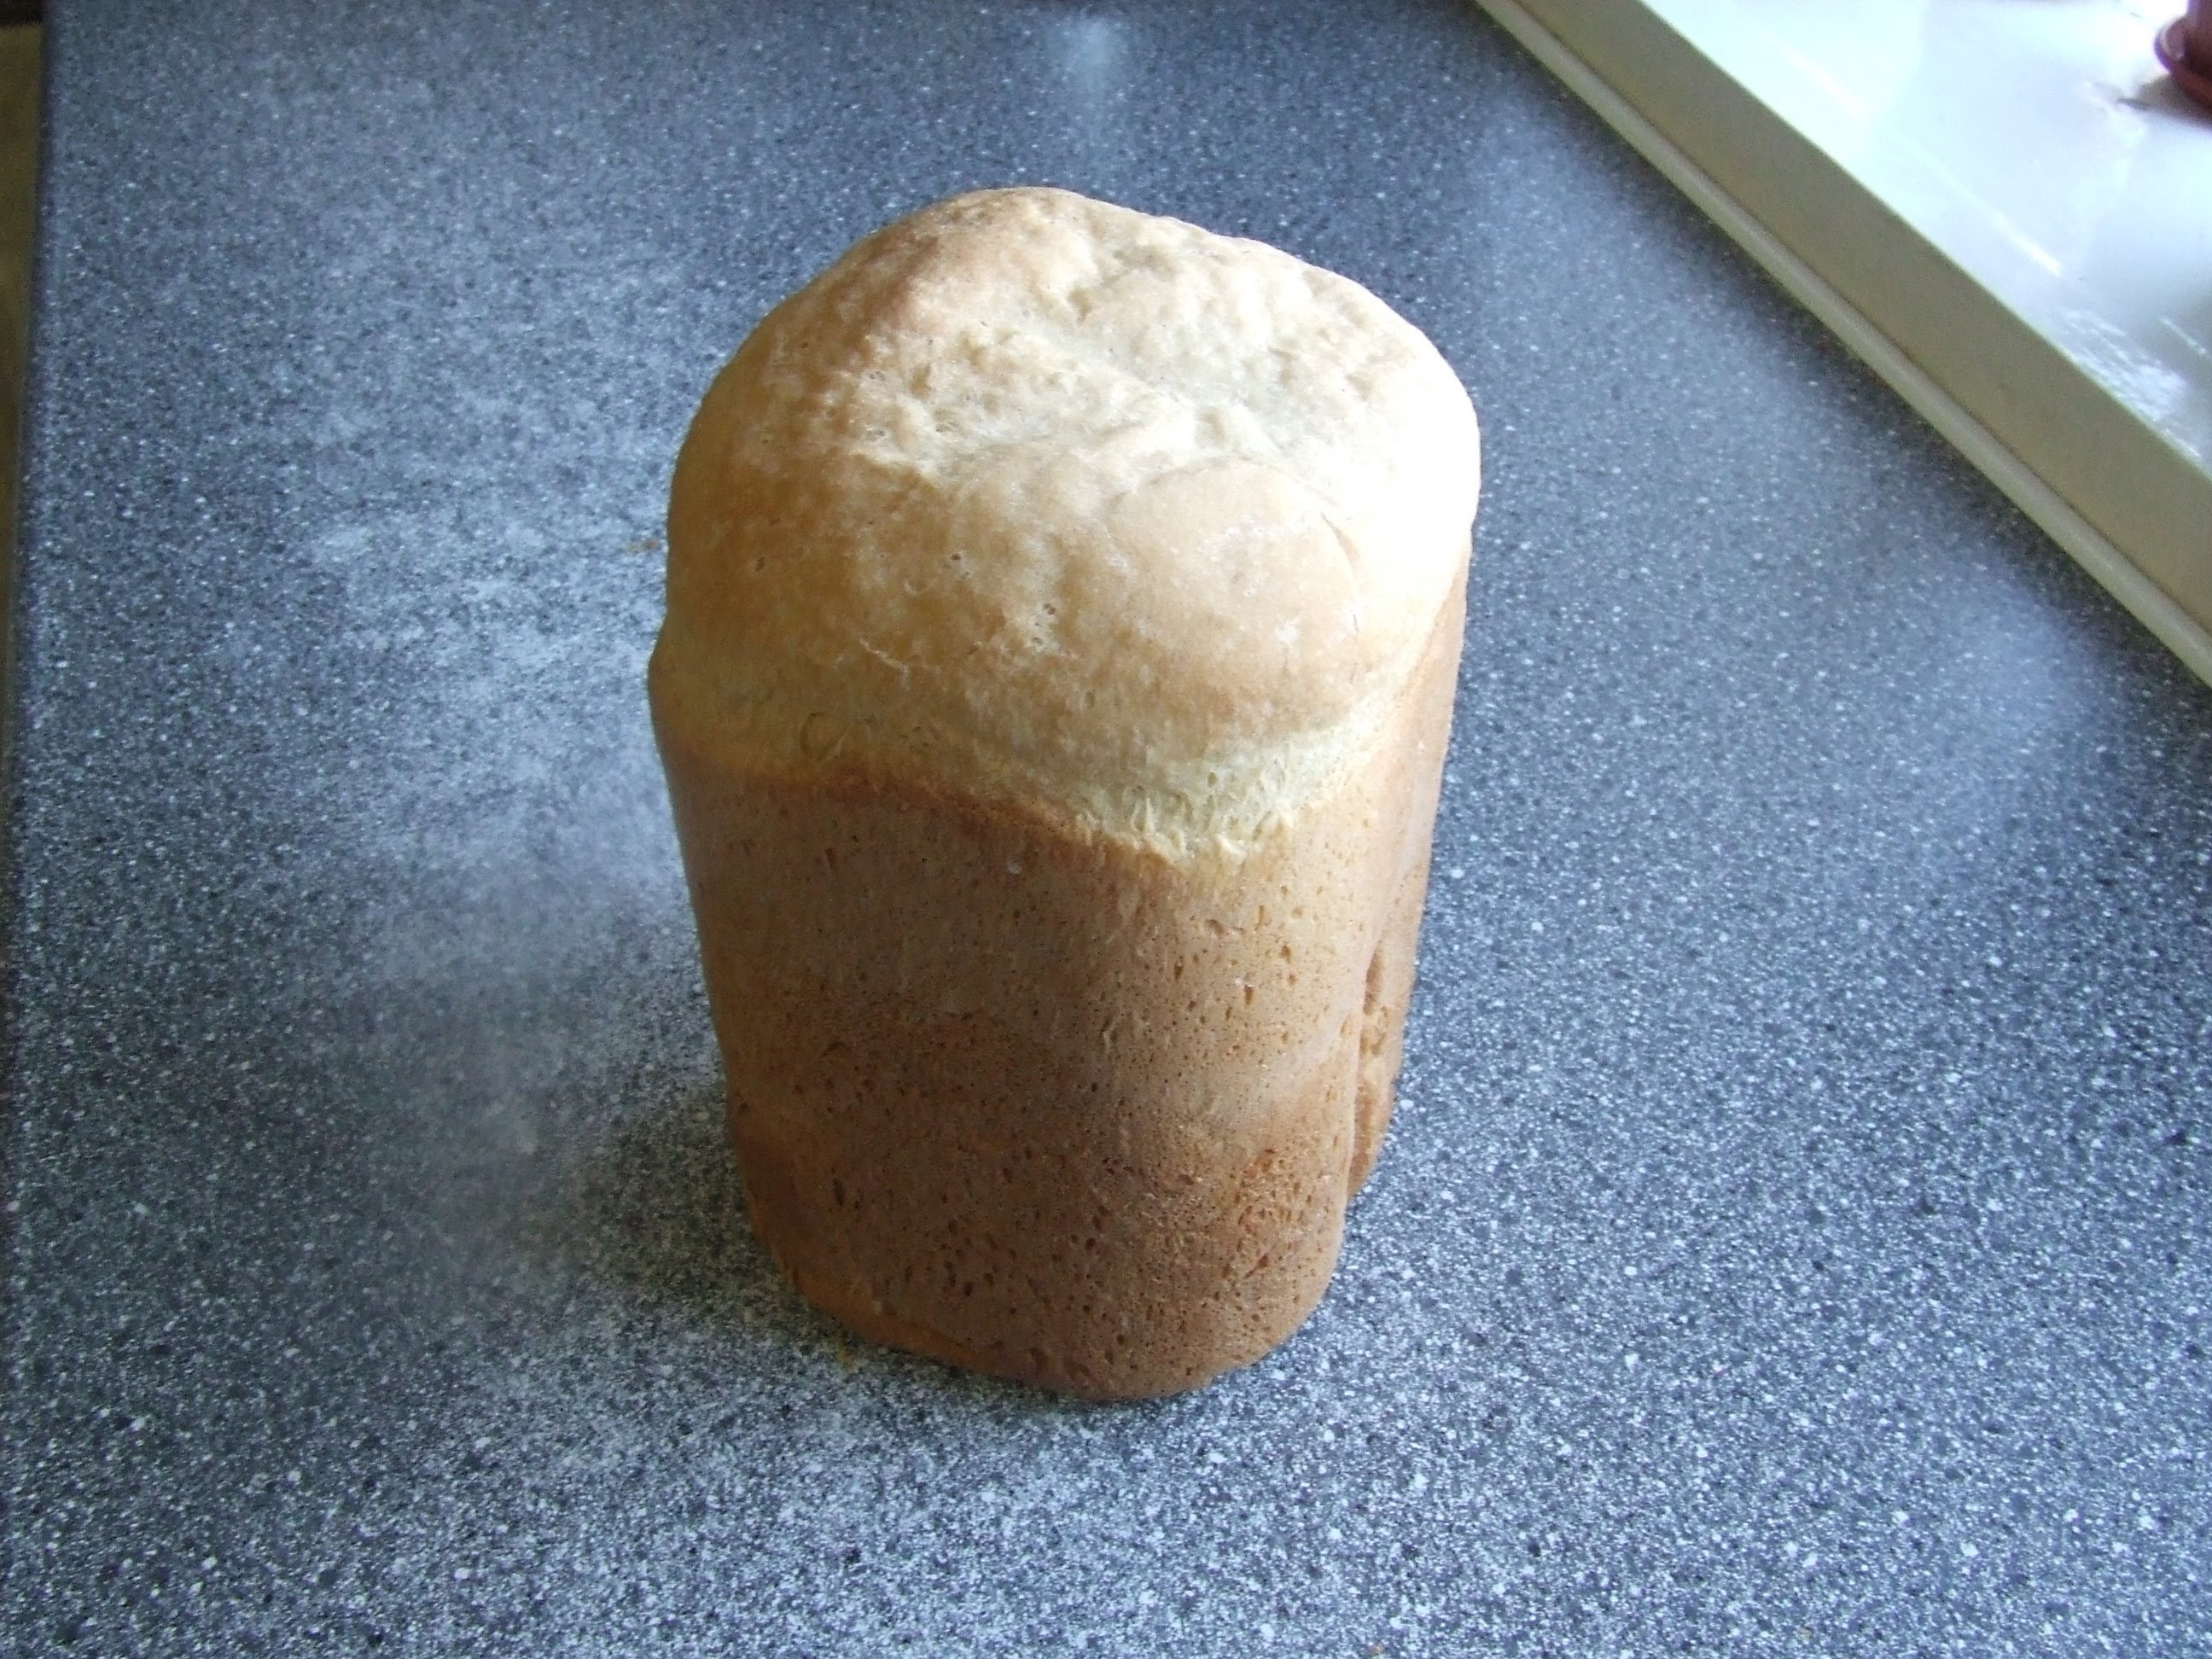 Видео рецепт хлебопечки. Французский хлеб в хлебопечи. Французская выпечка в хлебопечке. Французская выпечка хлеба в хлебопечке. Французская булка на закваске.